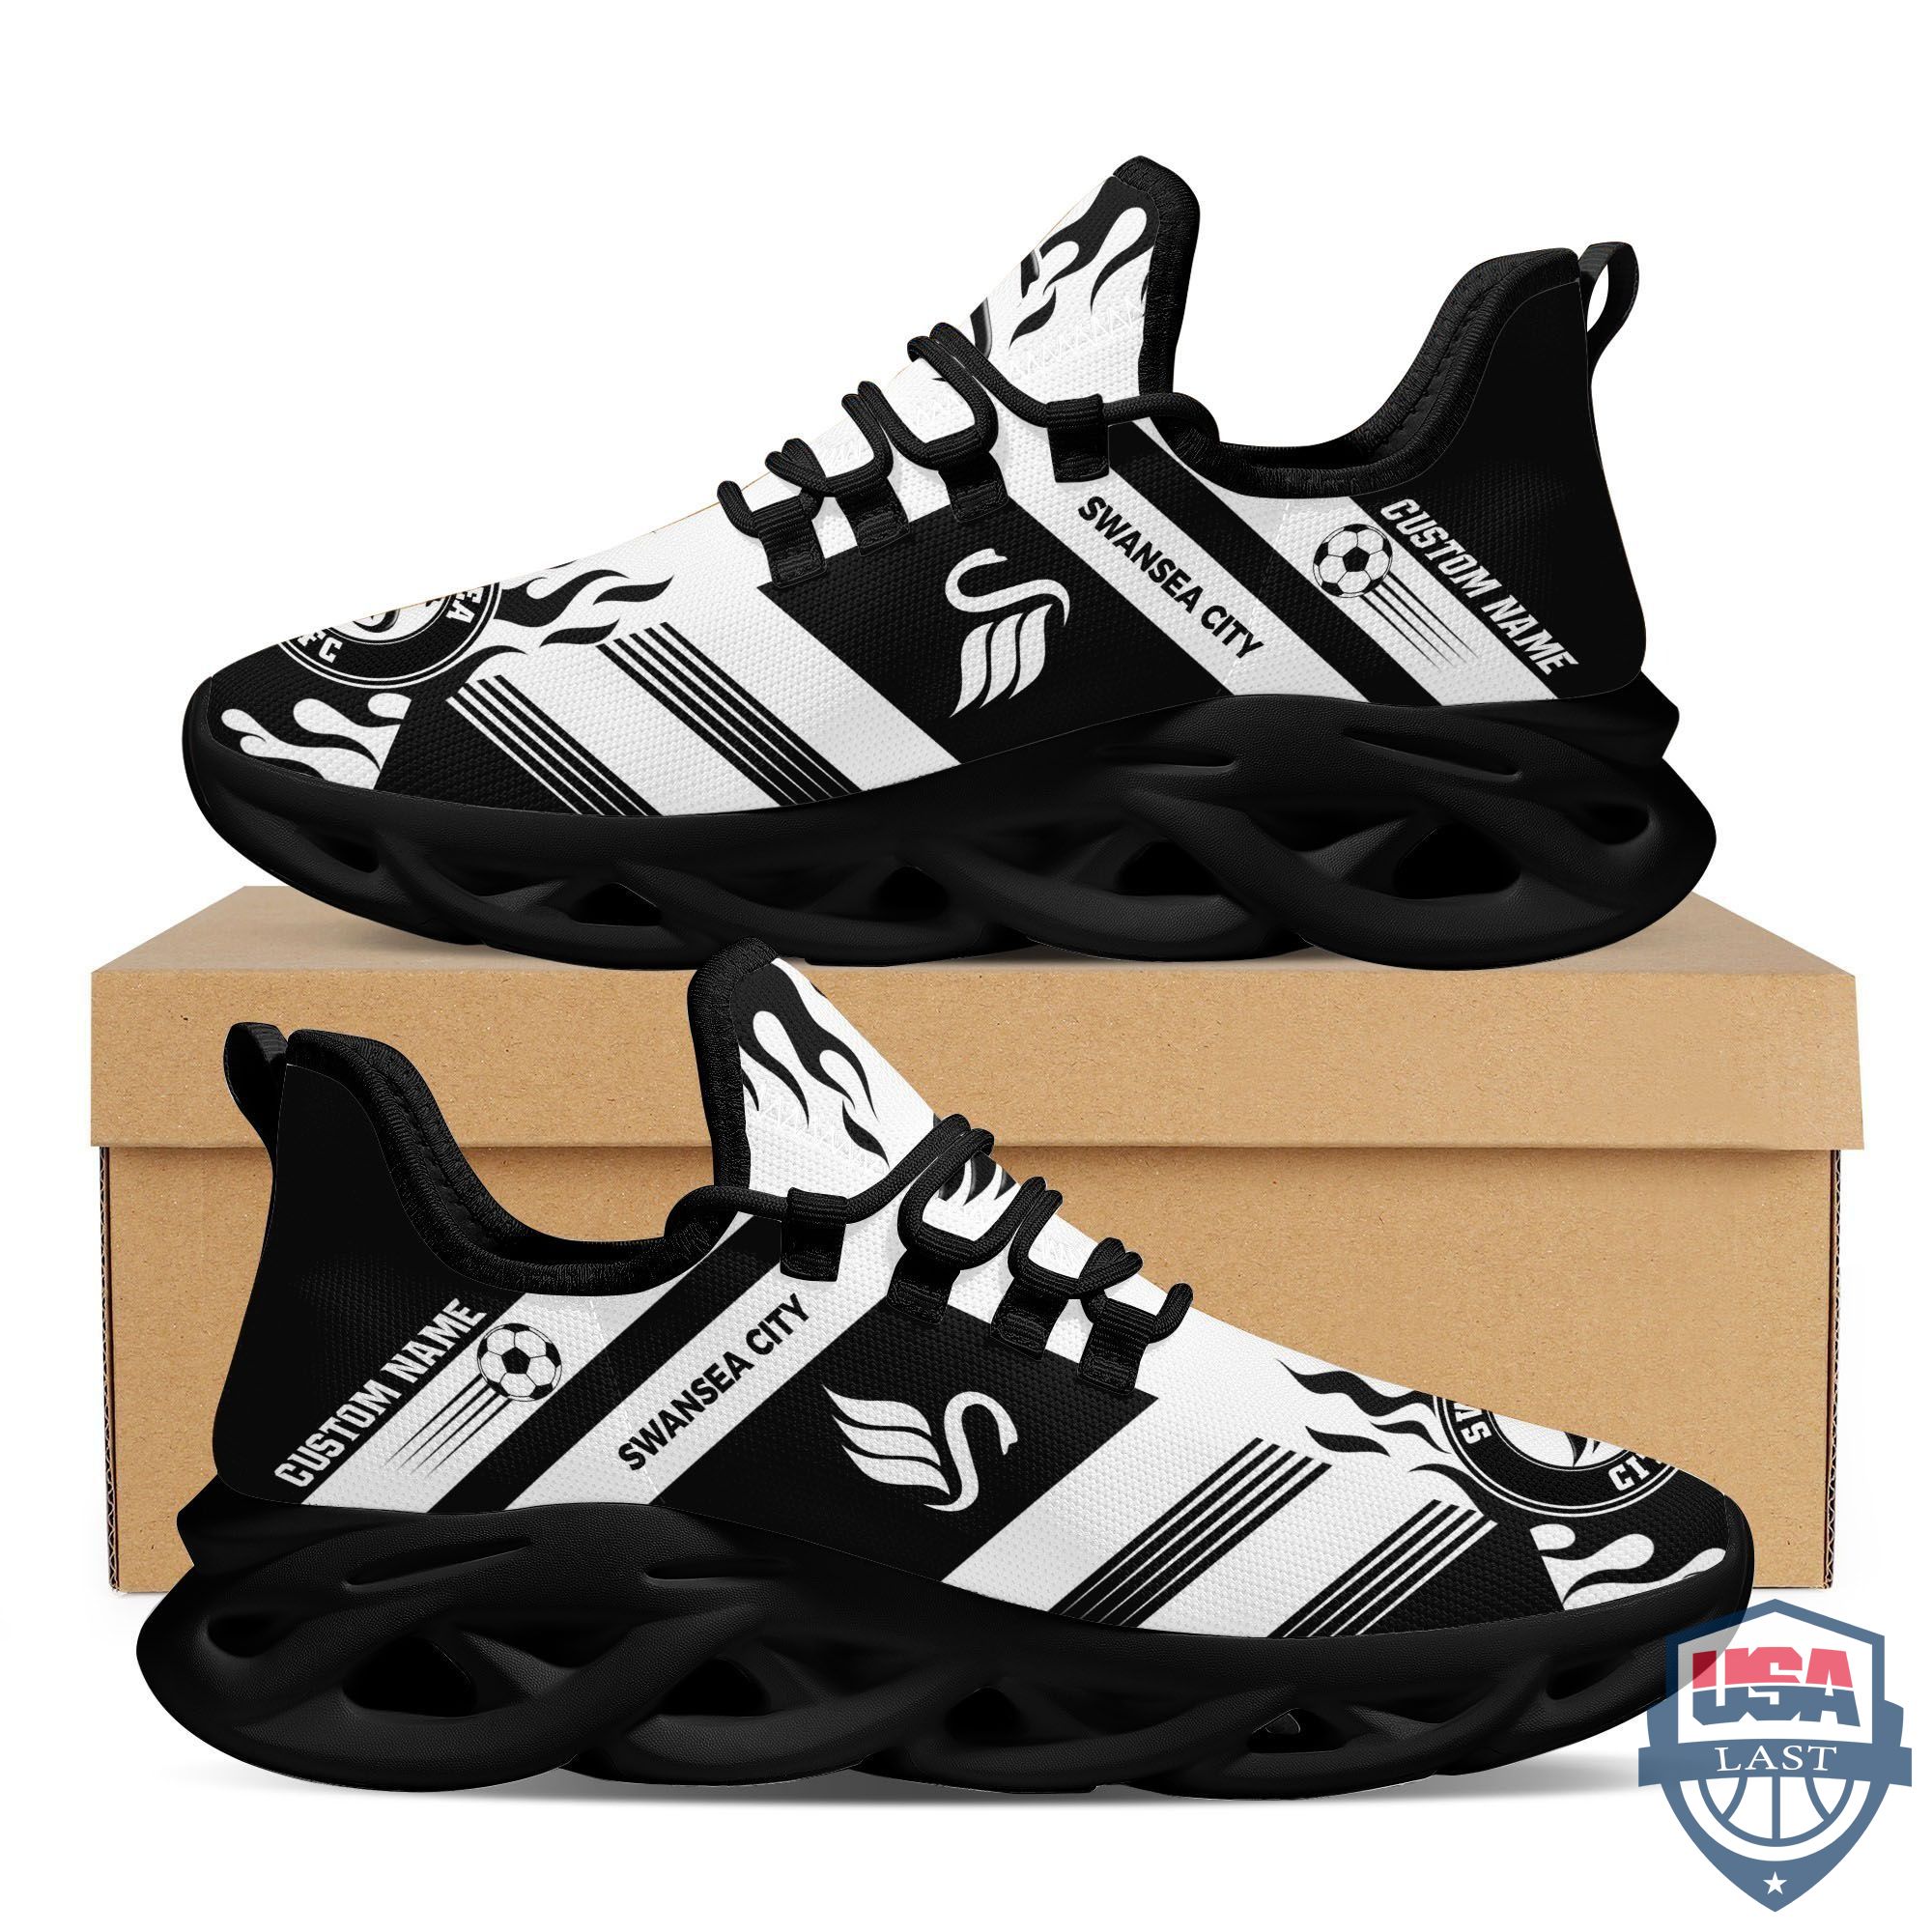 DXGRBfTy-T140122-138xxxSwansea-City-Custom-Name-Max-Soul-Sneakers-Running-Shoes.jpg